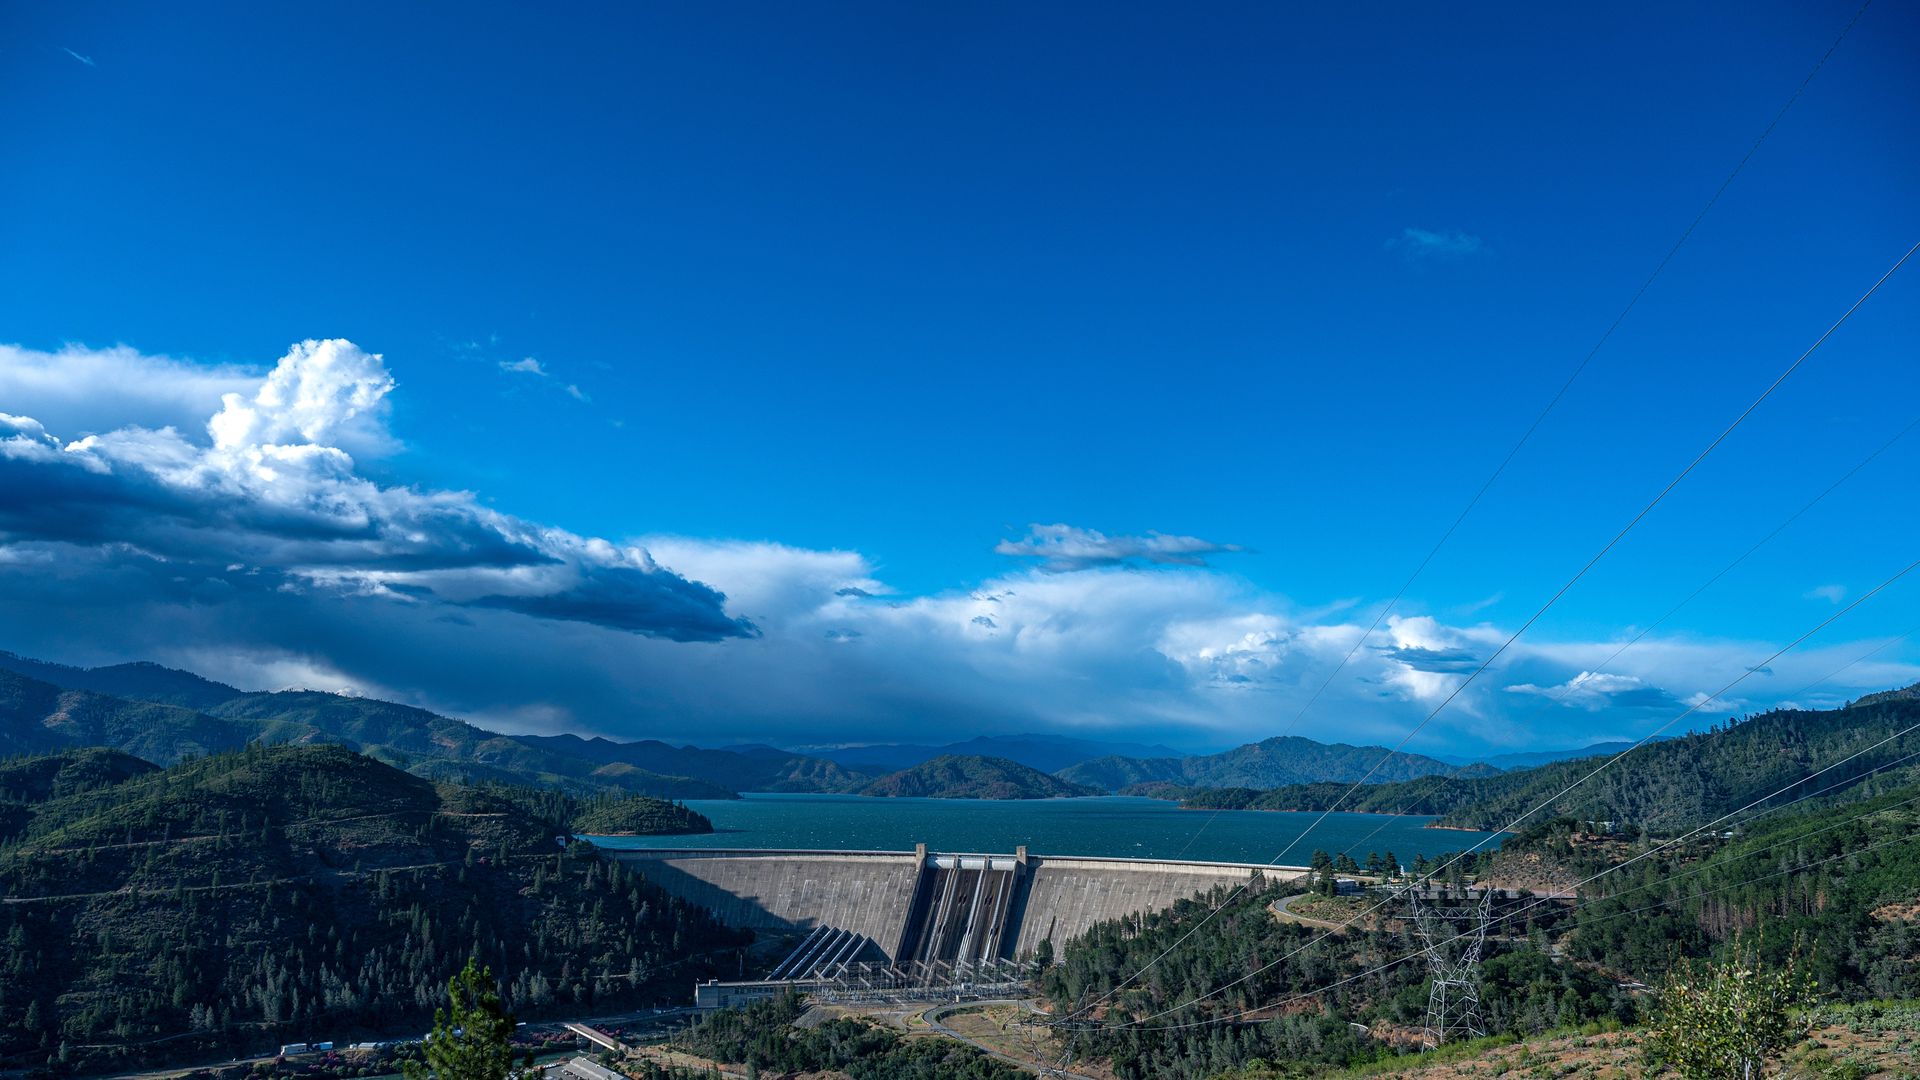 California's Shasta Dam